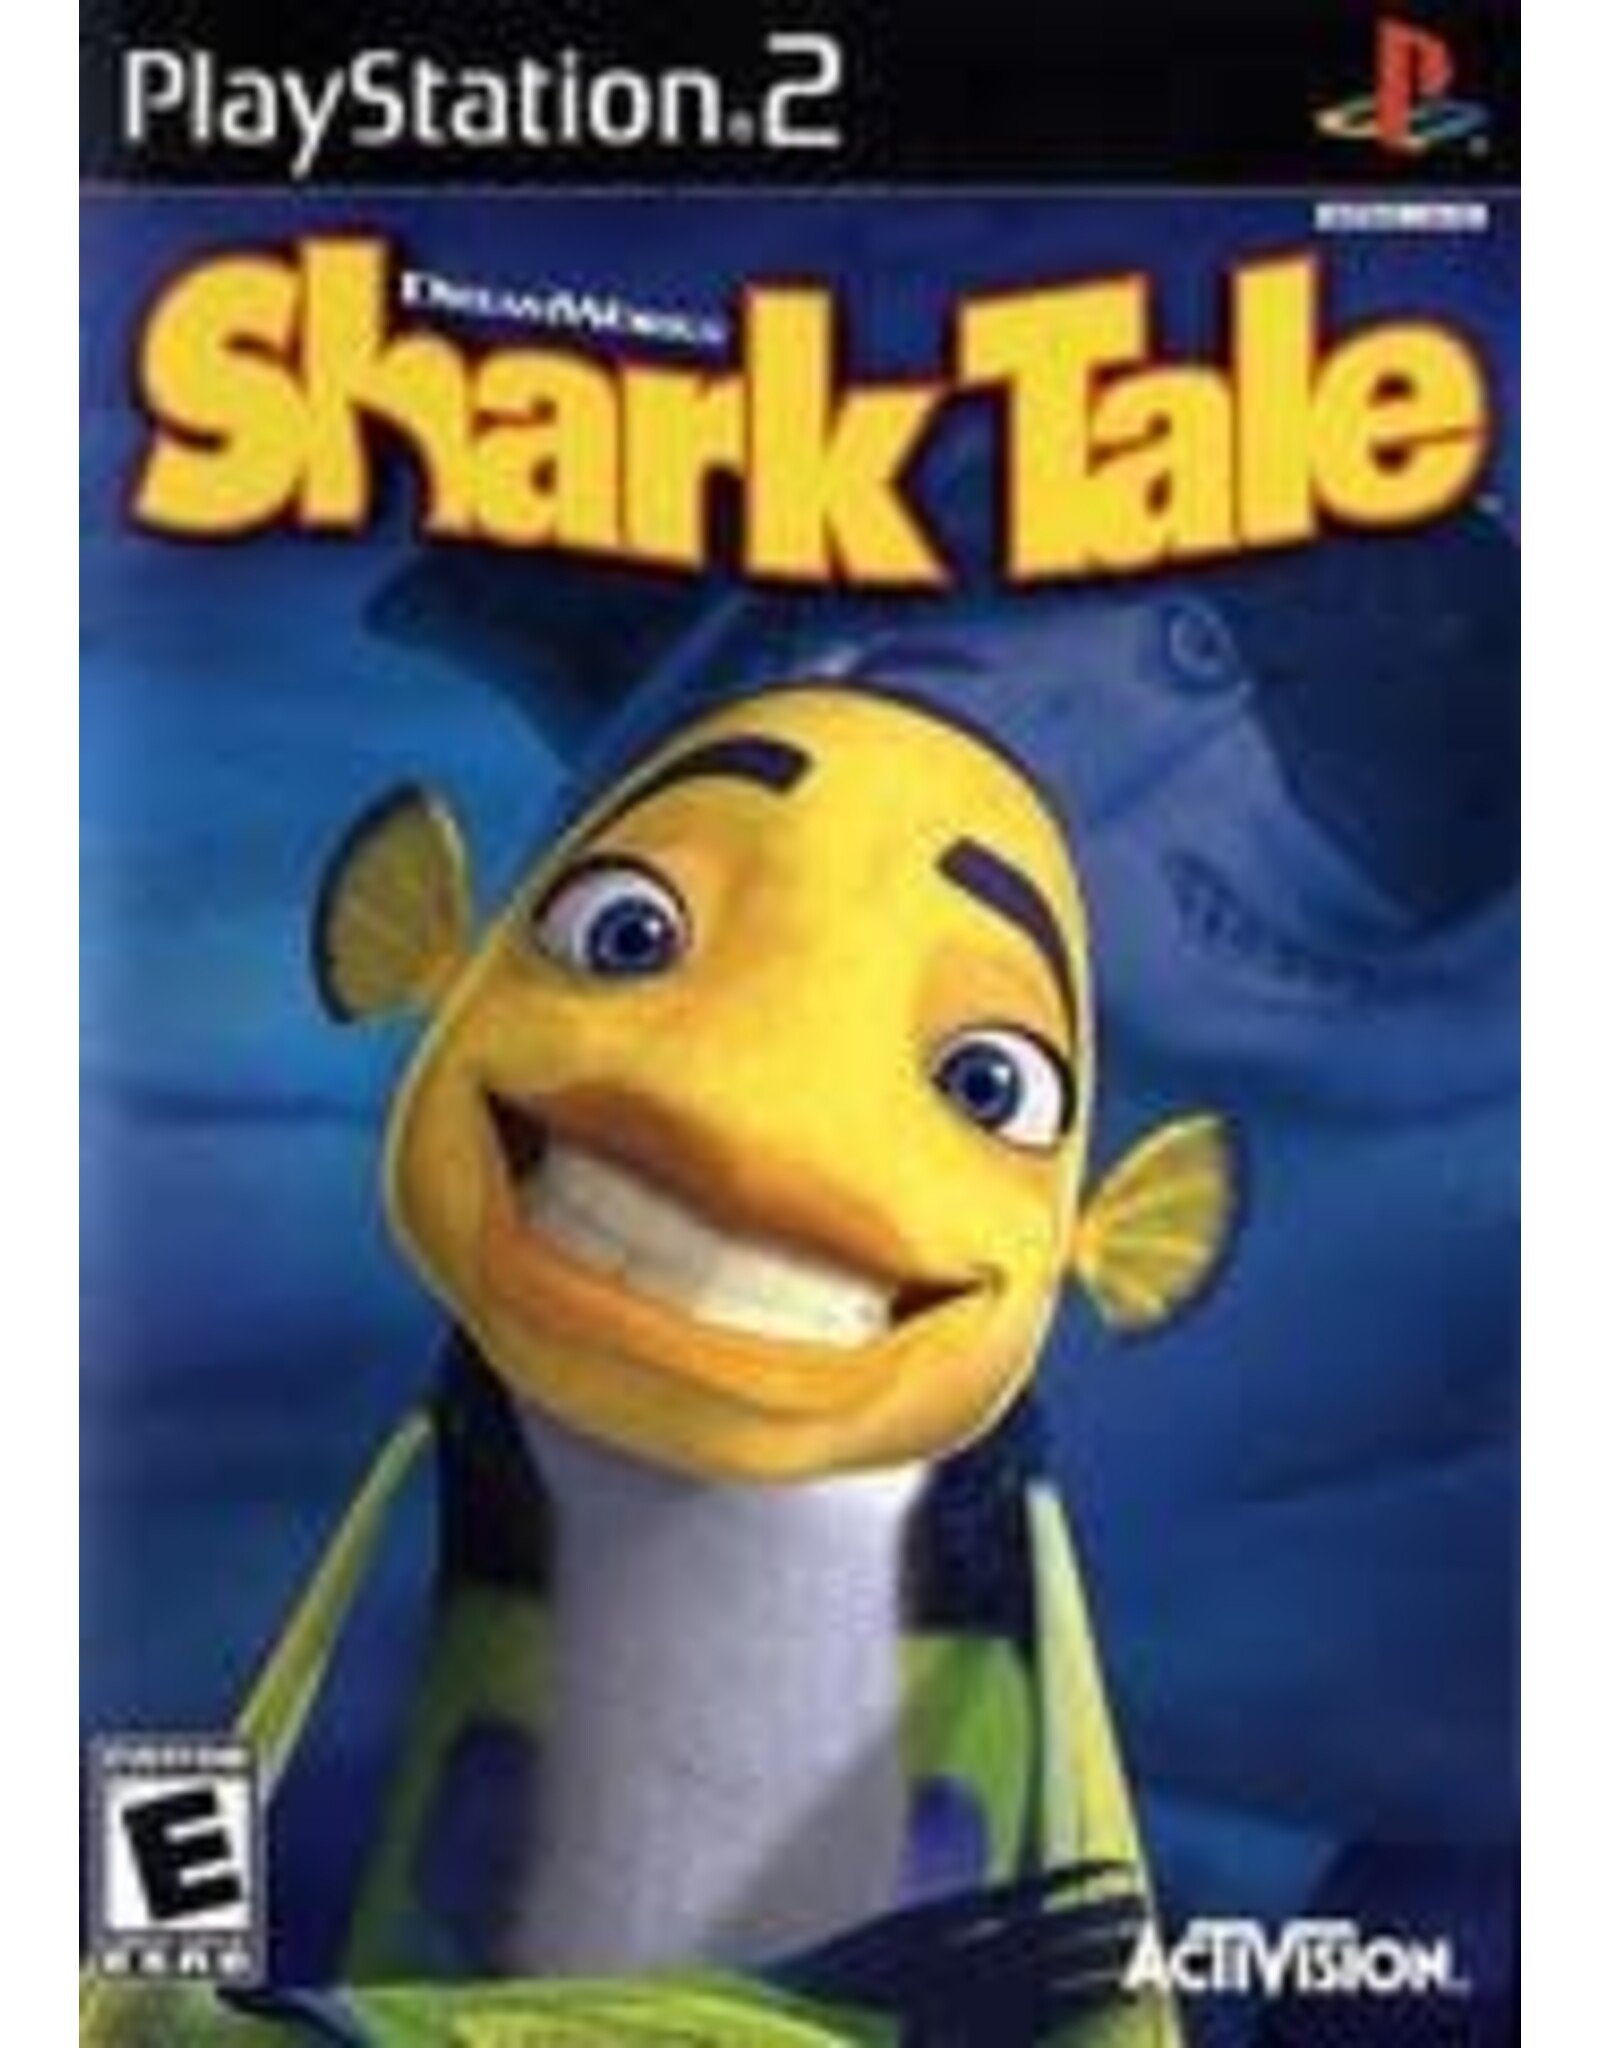 Playstation 2 Shark Tale (CiB)